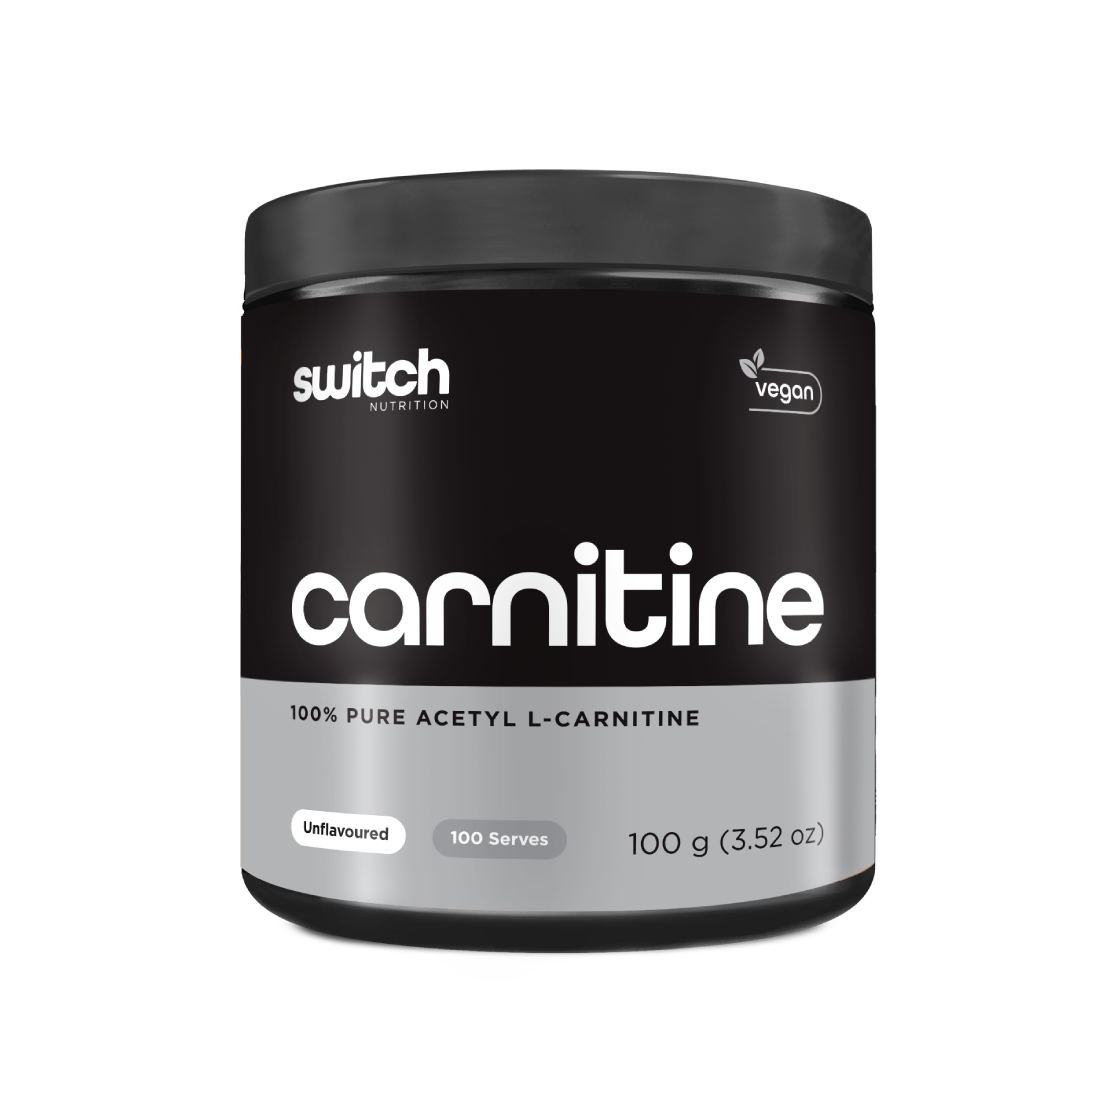 Switch Carnitine